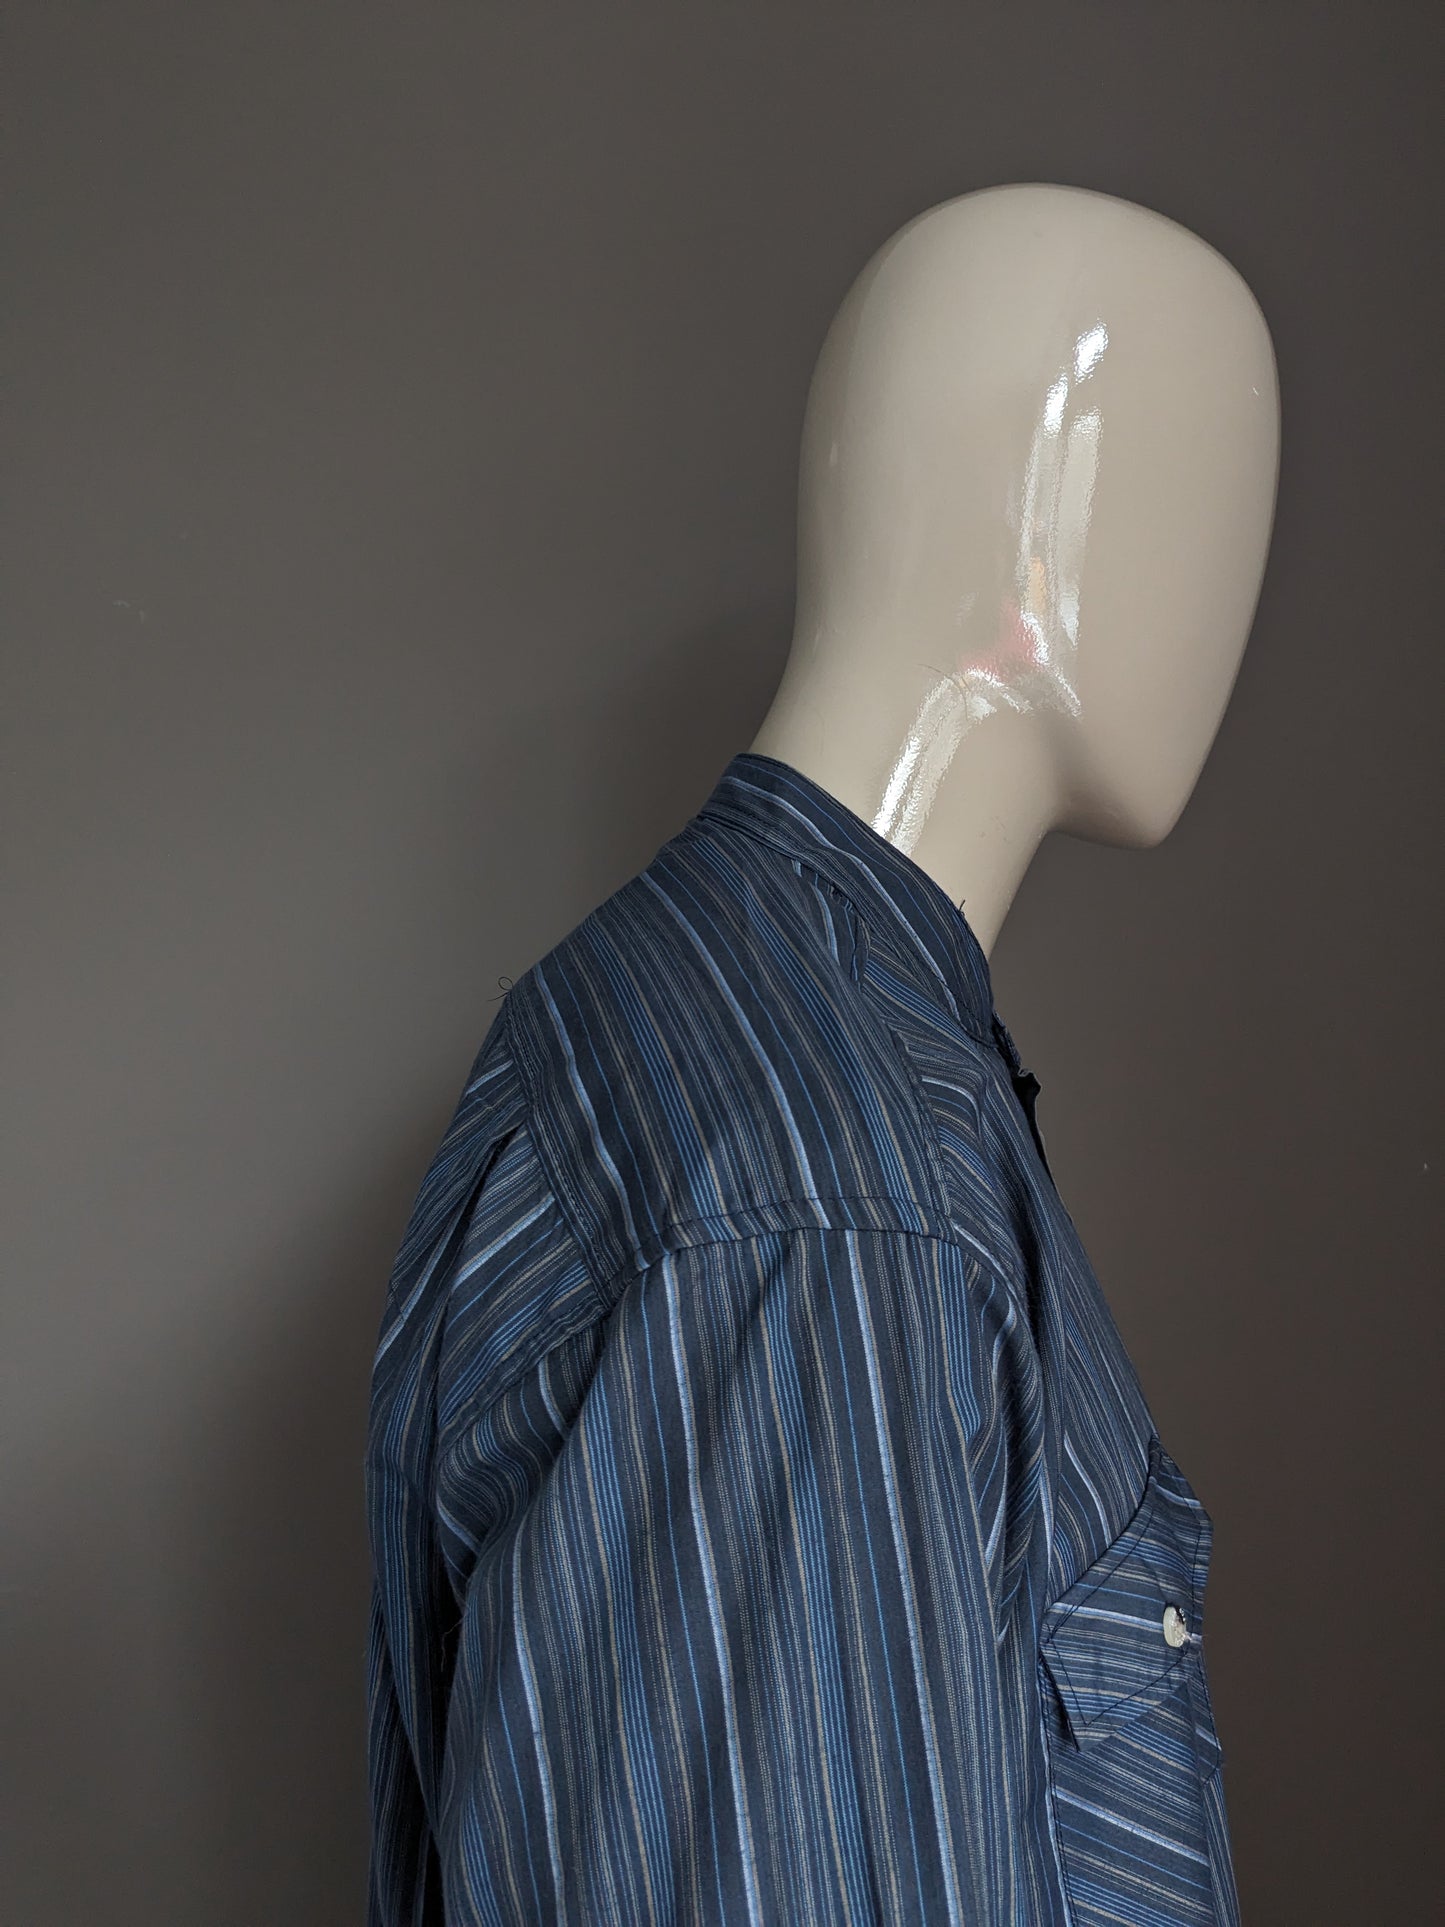 Atlas for Men shirt shirt with upright / farmers / mao collar. Blue brown striped. Size 2XL / XXL.